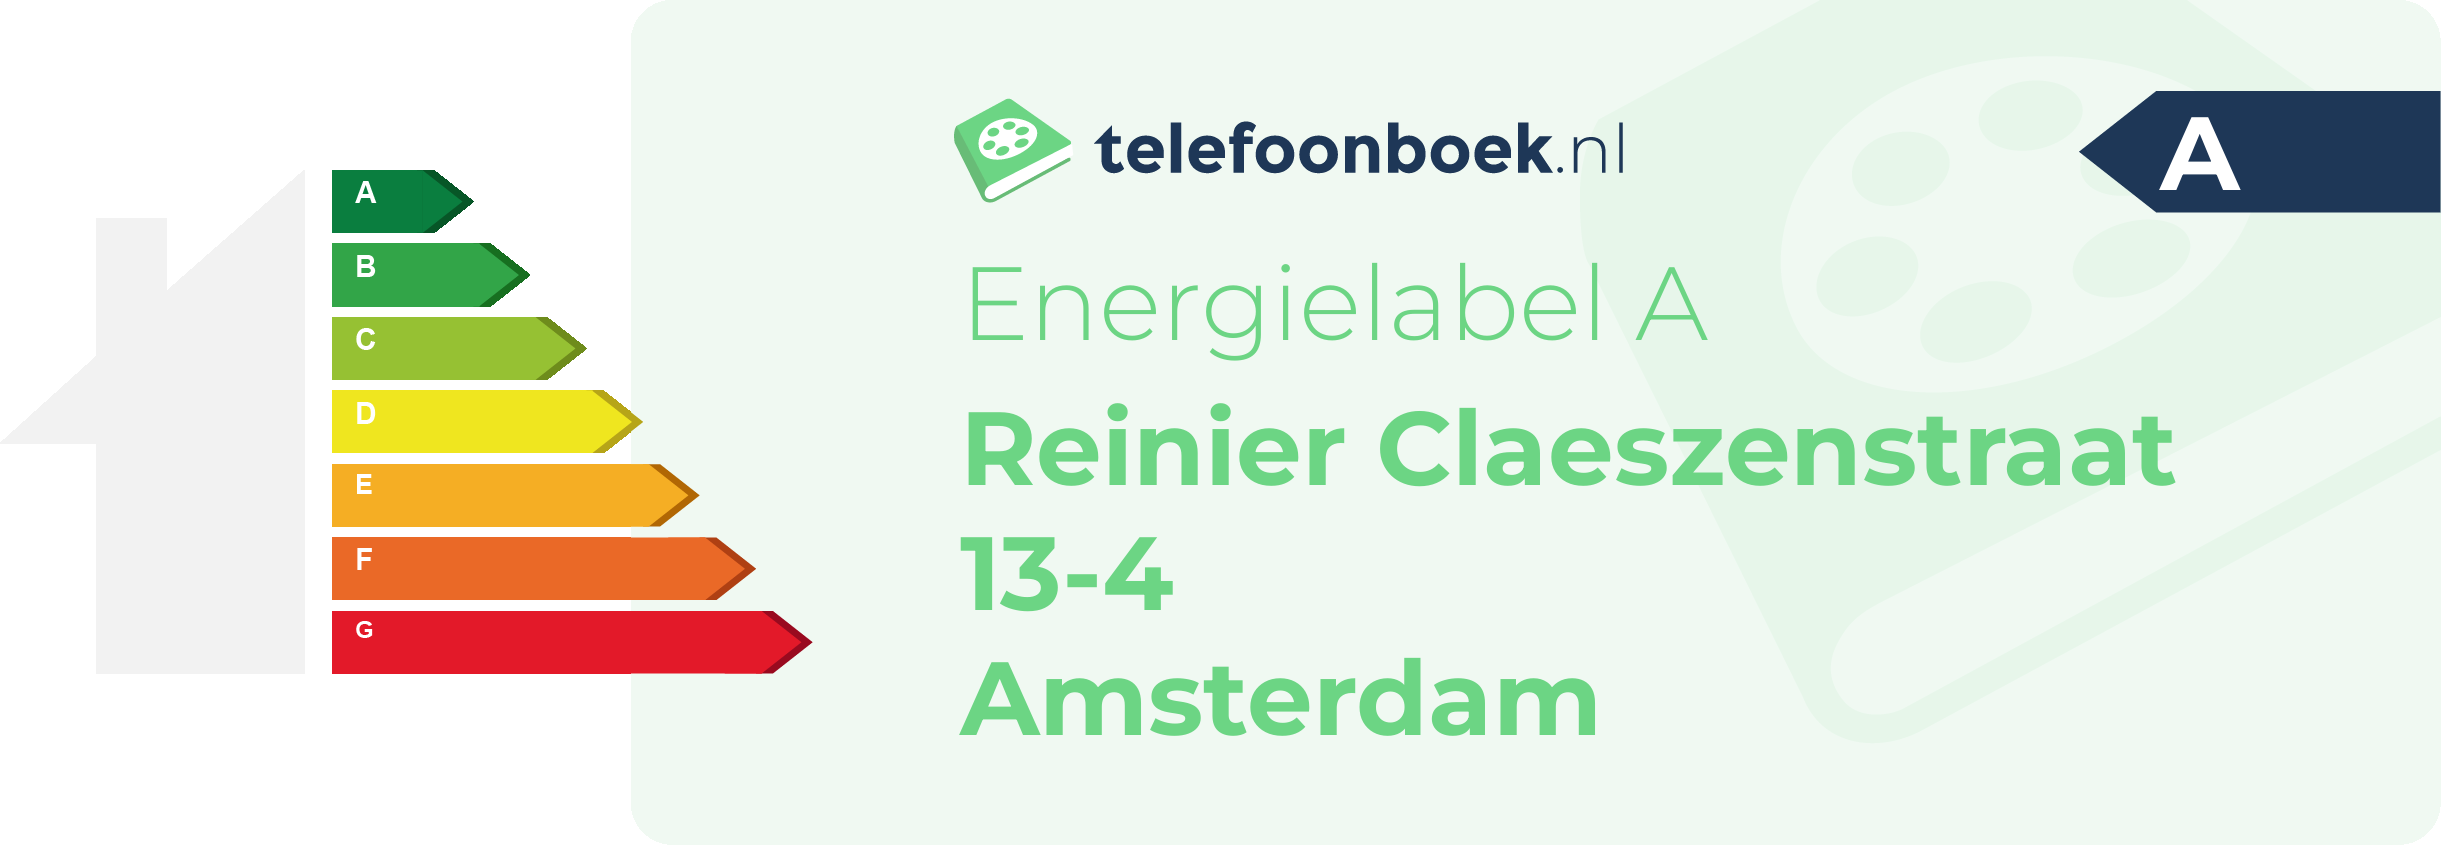 Energielabel Reinier Claeszenstraat 13-4 Amsterdam